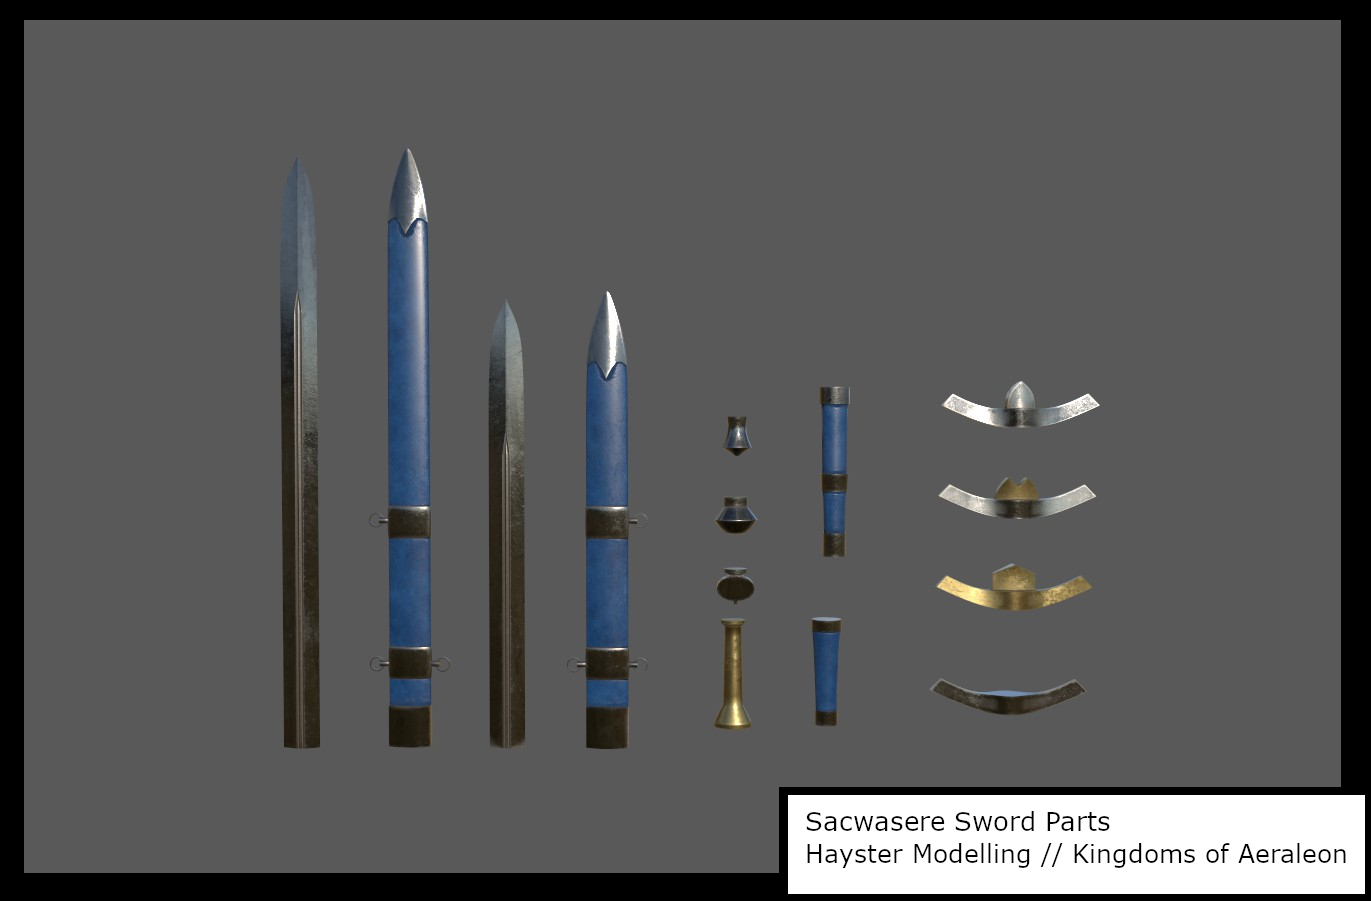 Showcase Sacwasere Sword Parts